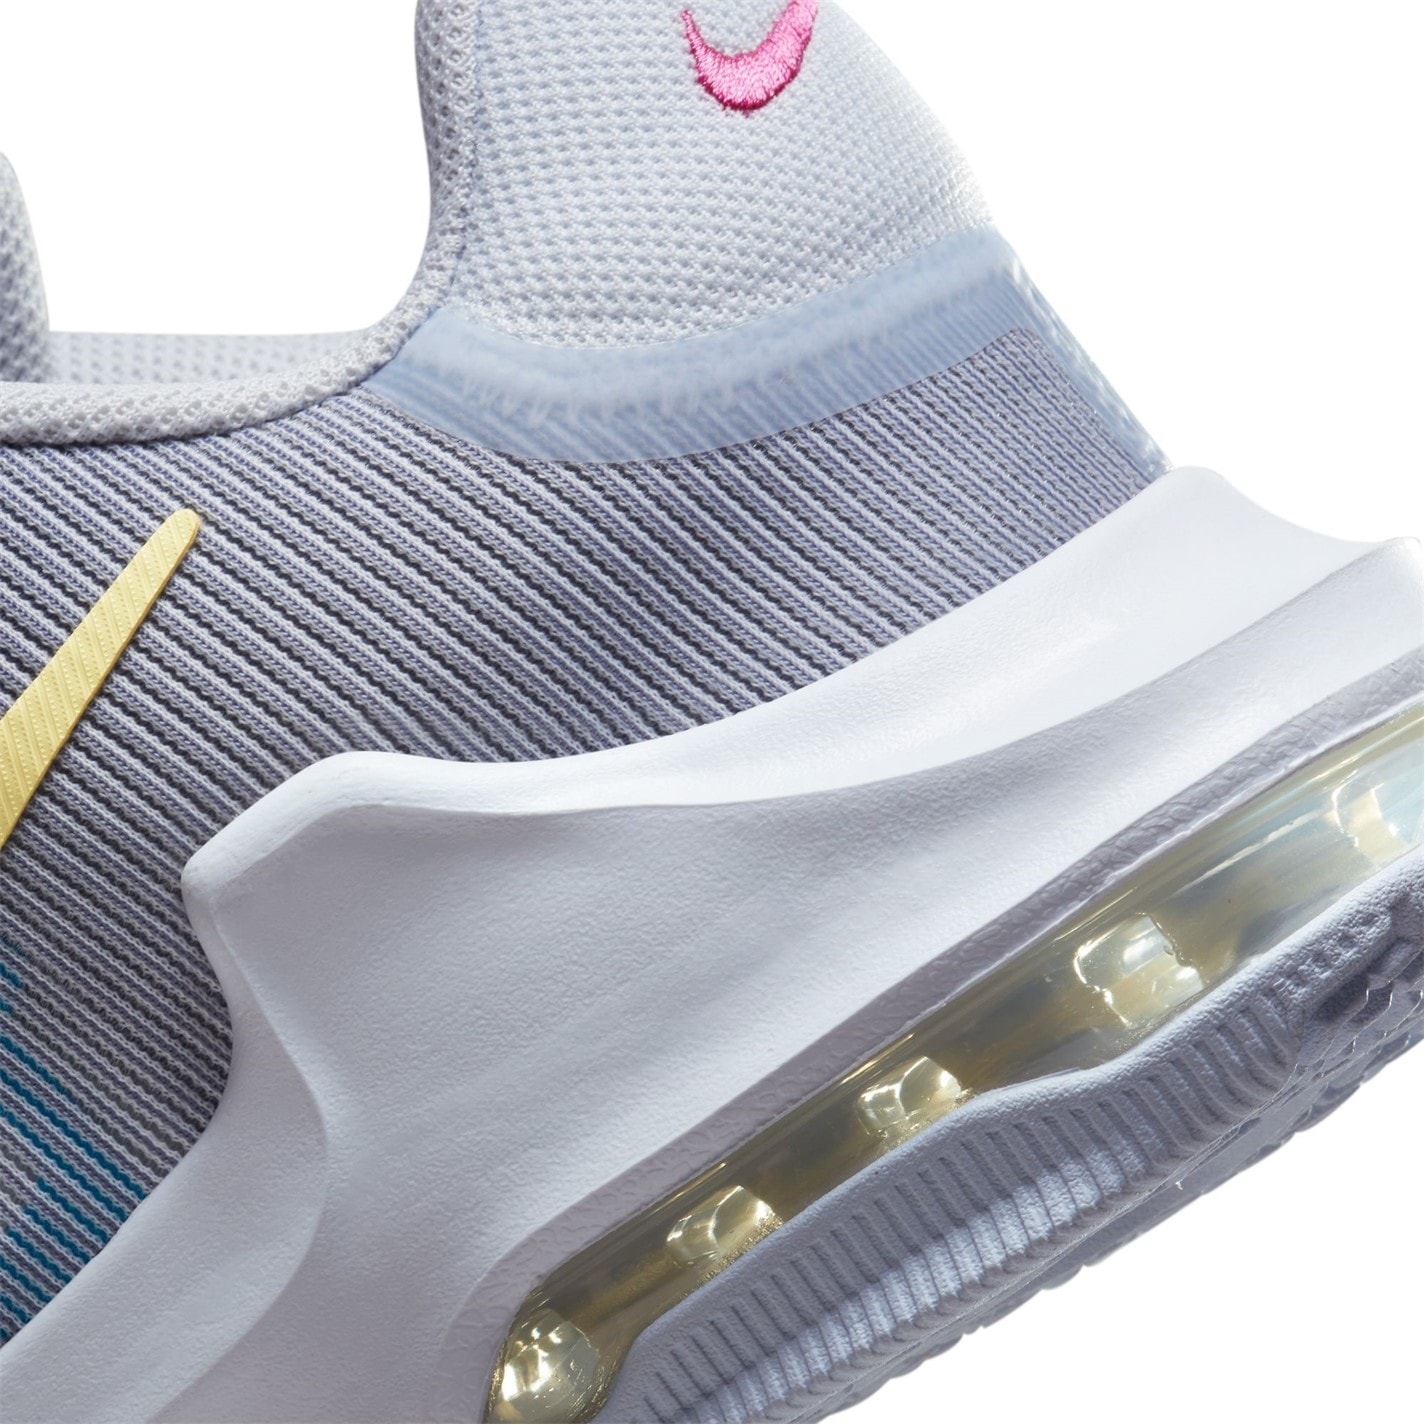 Adidasi pentru Baschet Nike Air Max Impact 4 pentru Barbati gri galben bleumarin